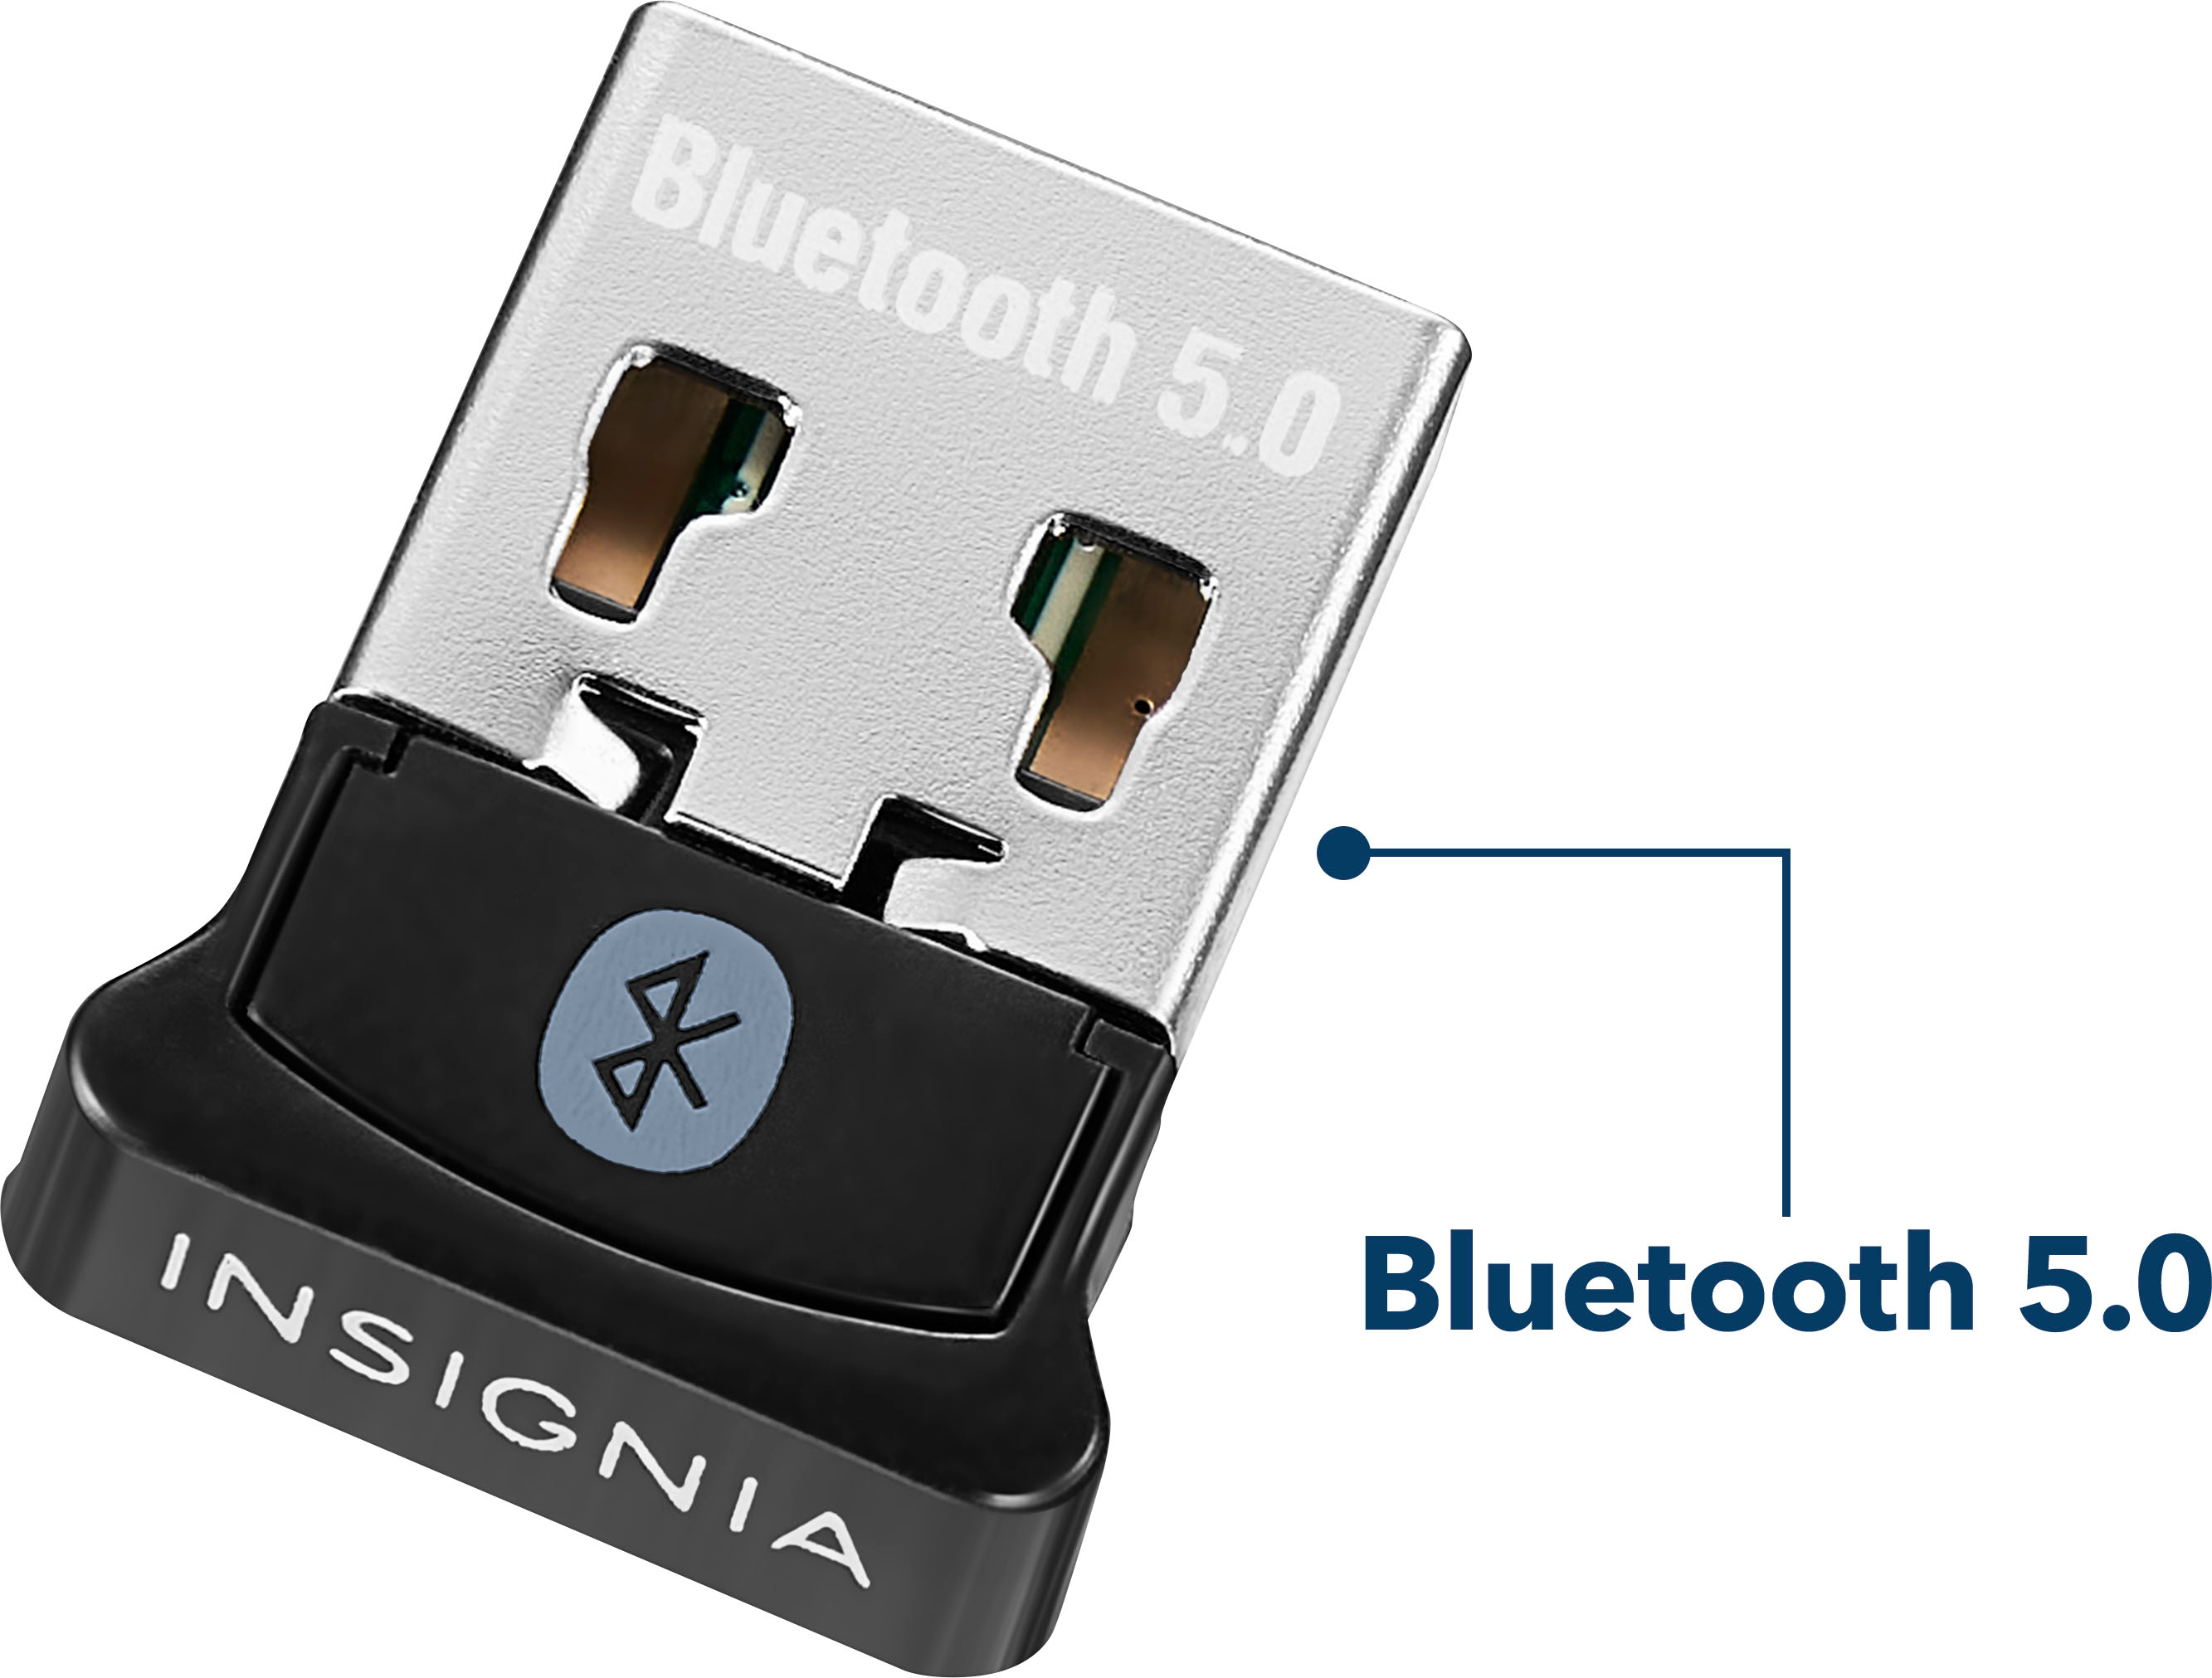 Insignia Bluetooth 5.0 USB Adapter - Black - 1 Each